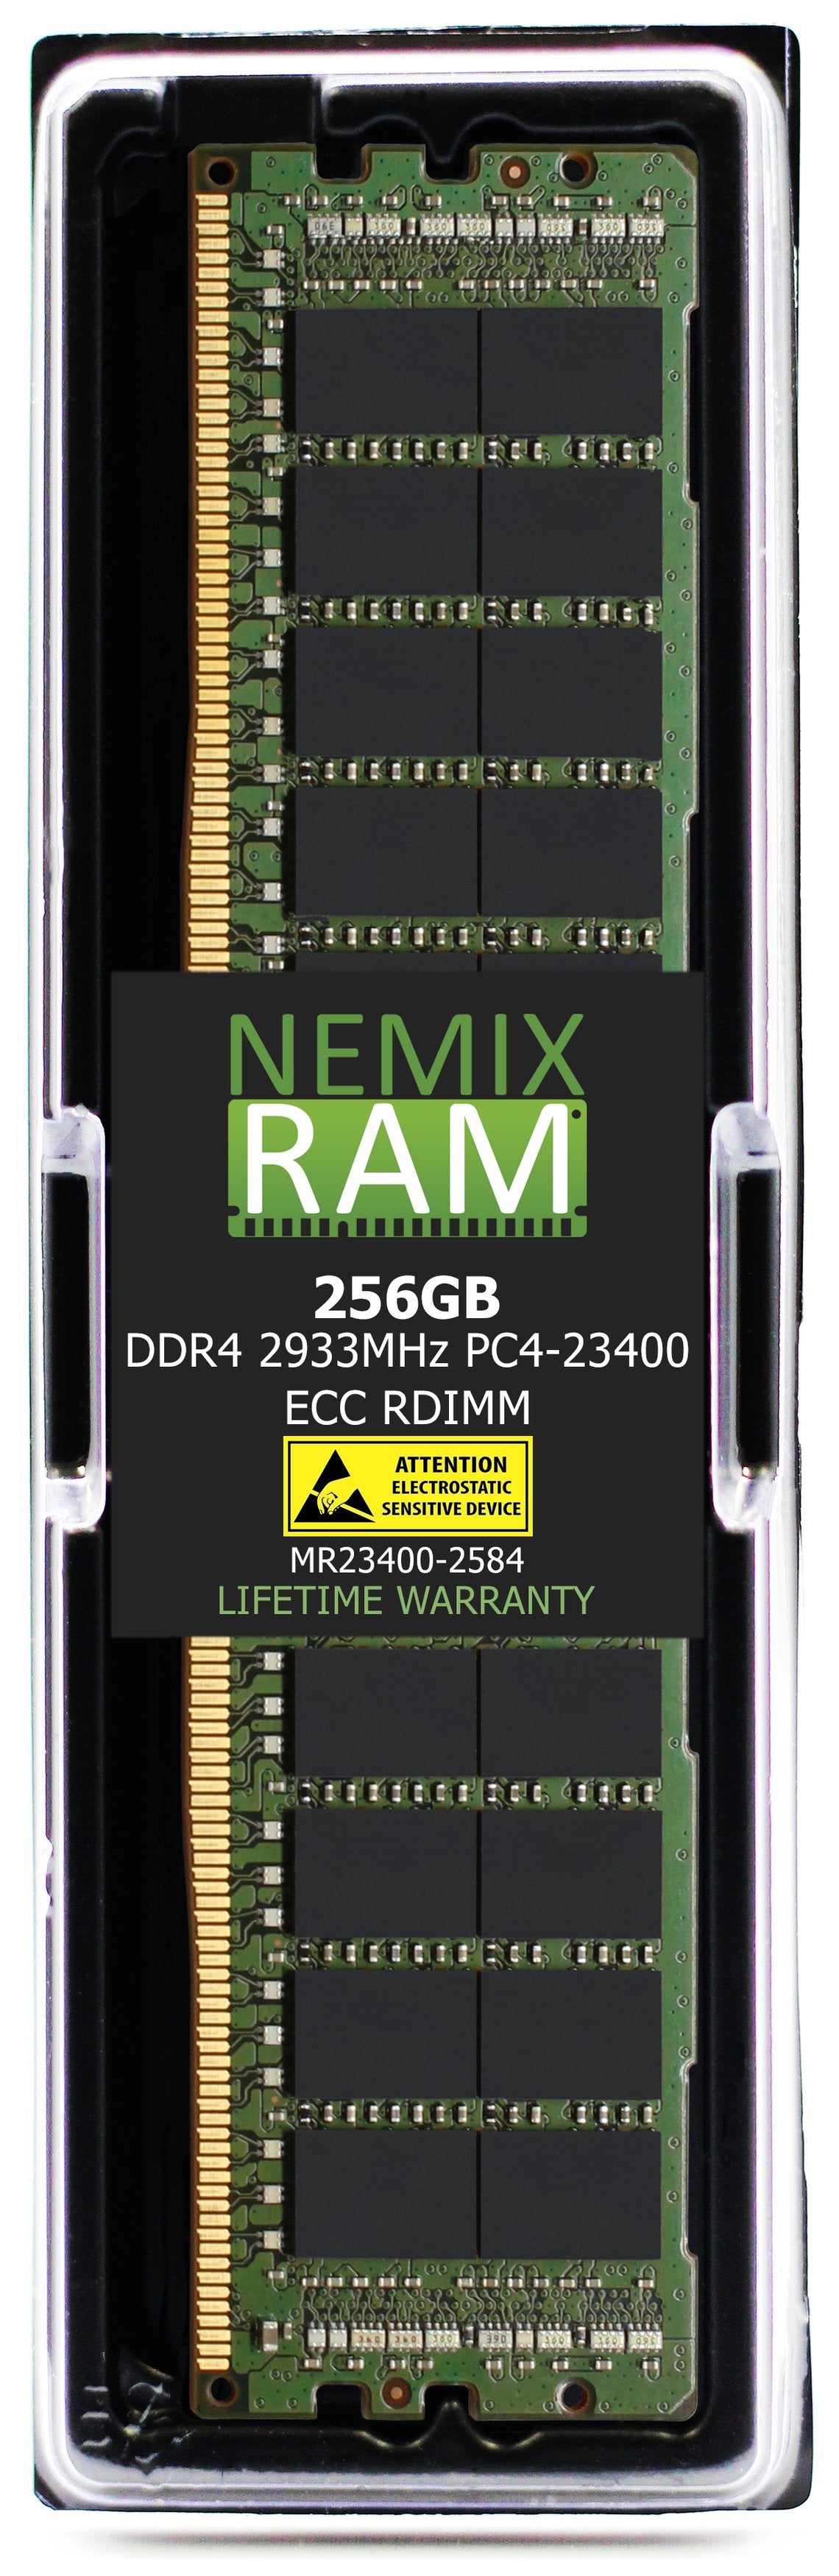 256GB DDR4 2933MHZ PC4-23400 RDIMM Compatible with Supermicro MEM-DR425L-SL01-ER29